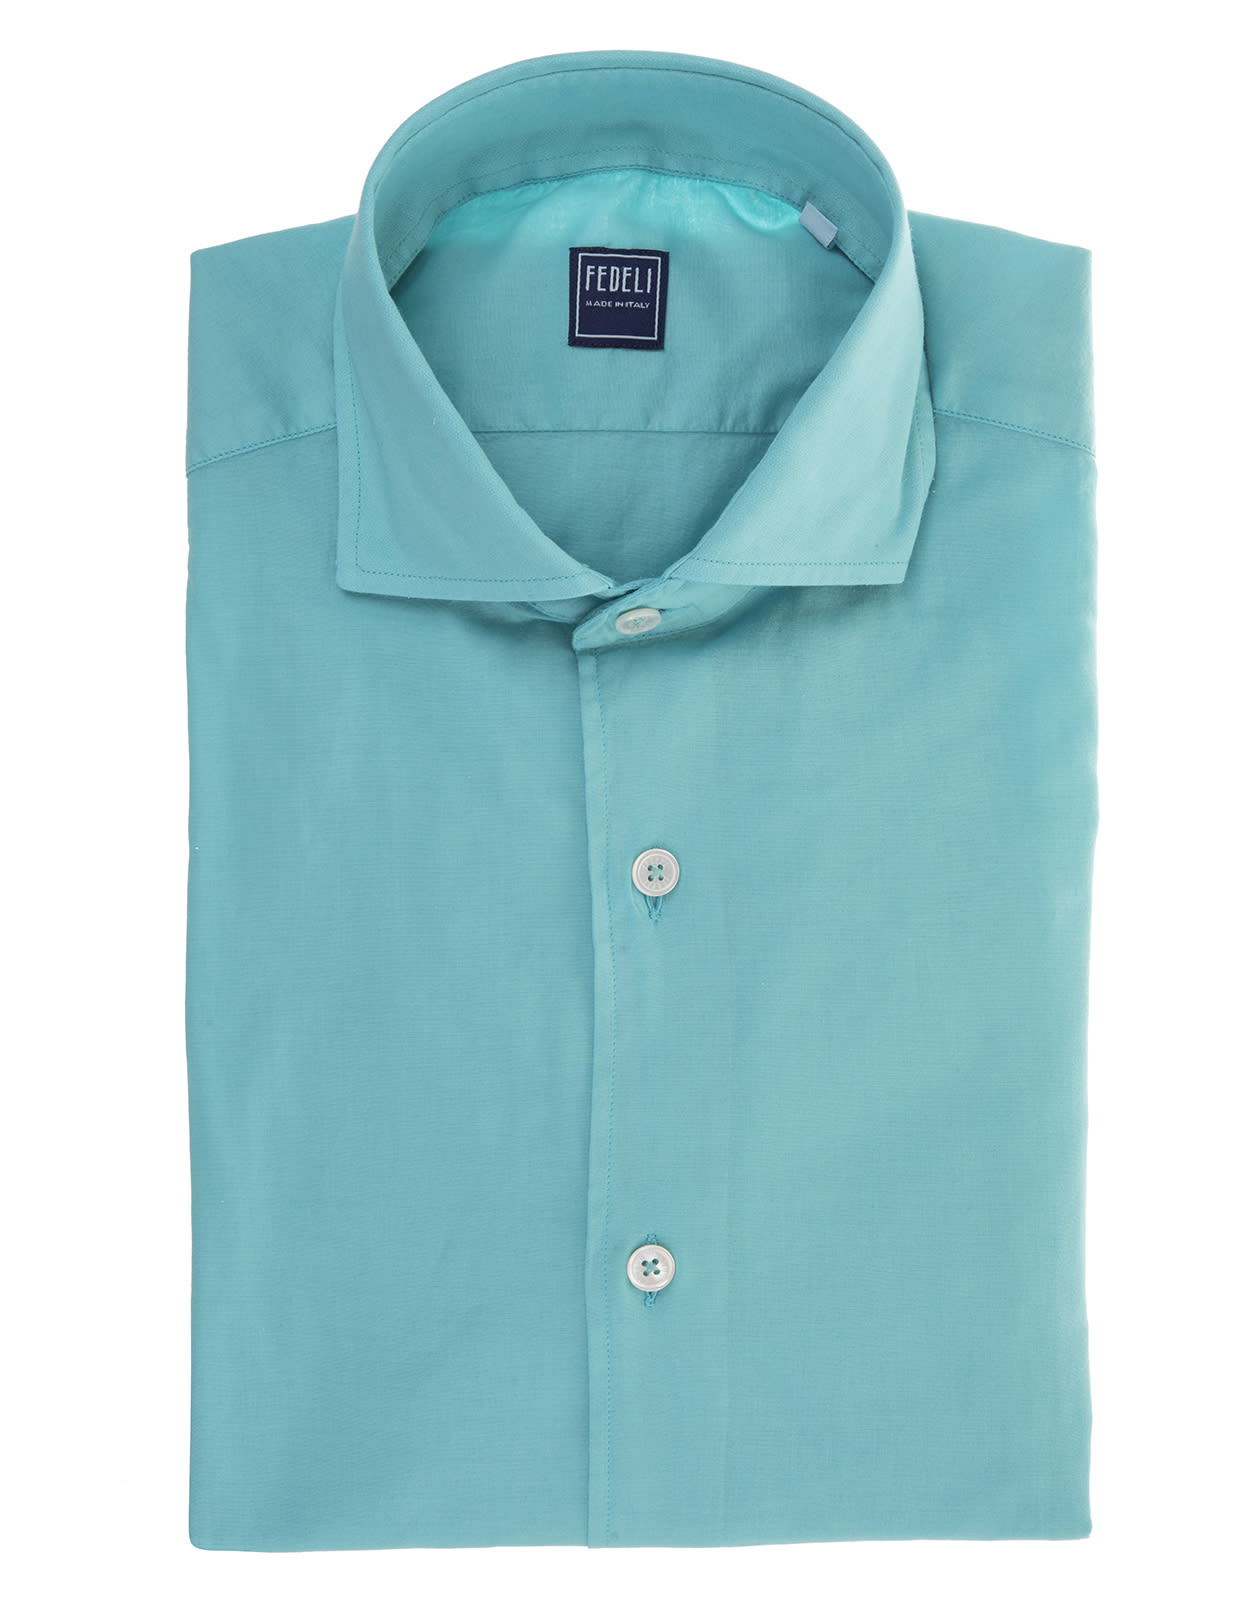 Fedeli Man Turquoise Lightweight Cotton Shirt